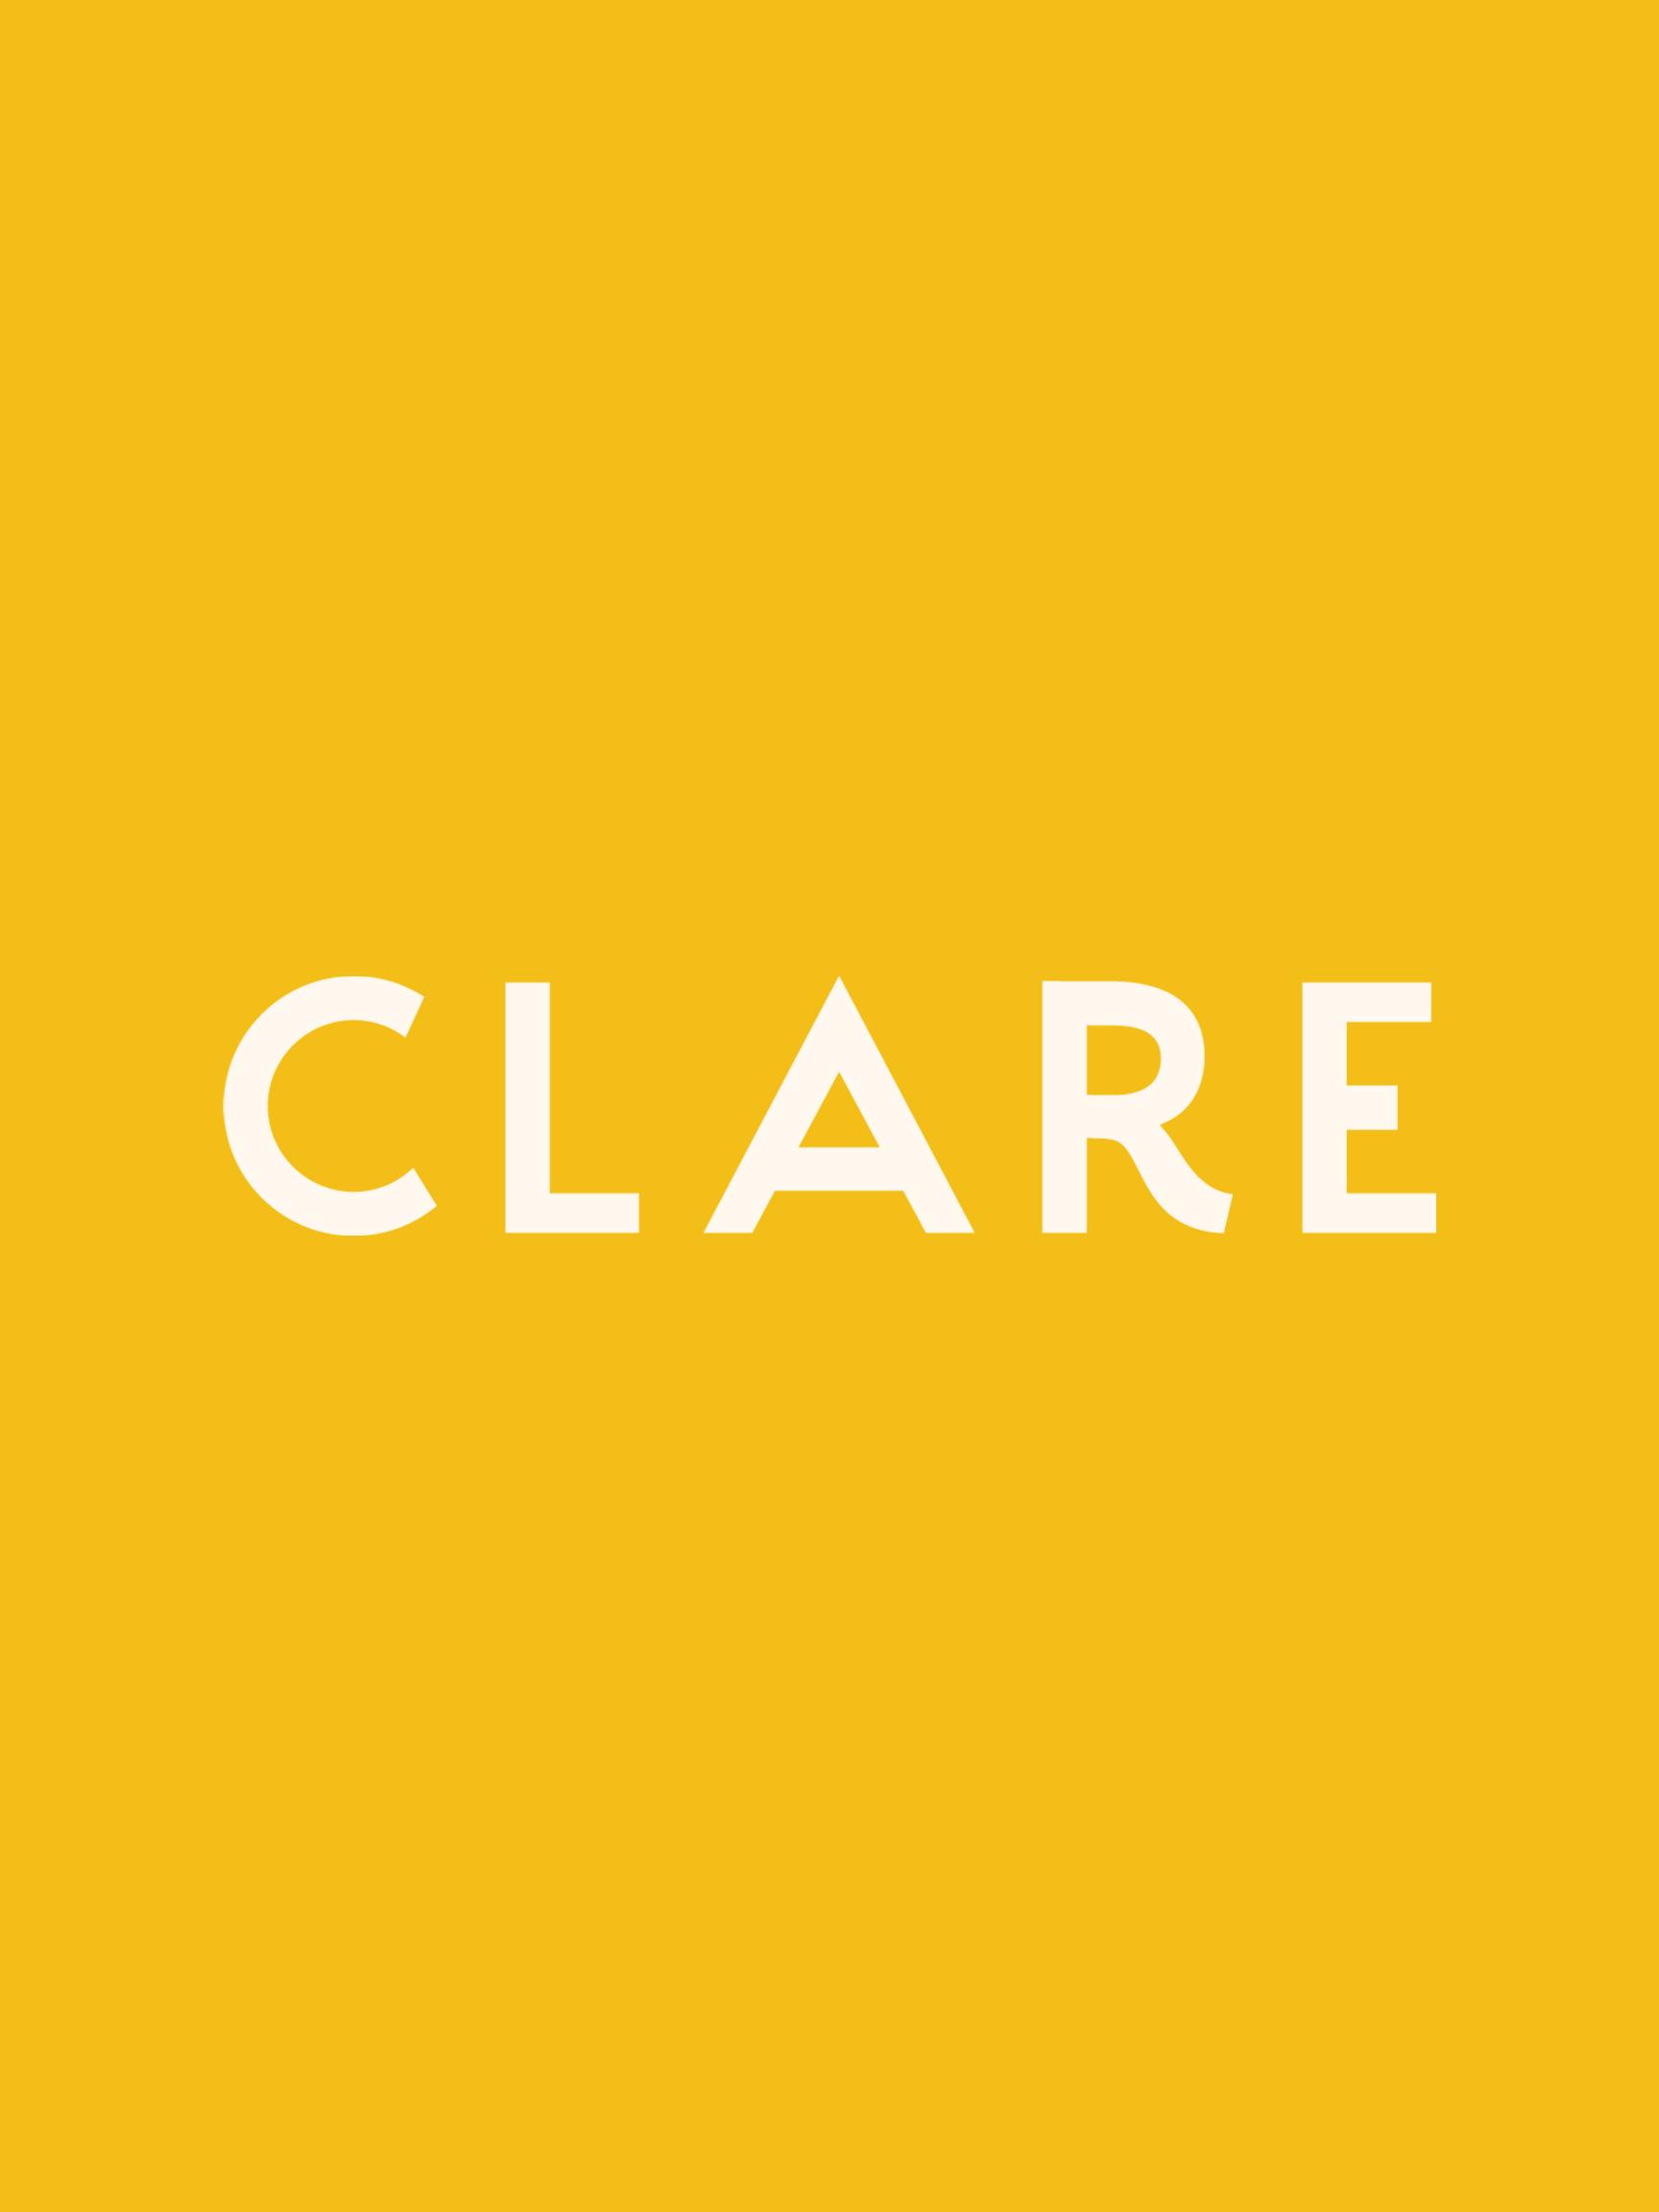 Clare logo 2x